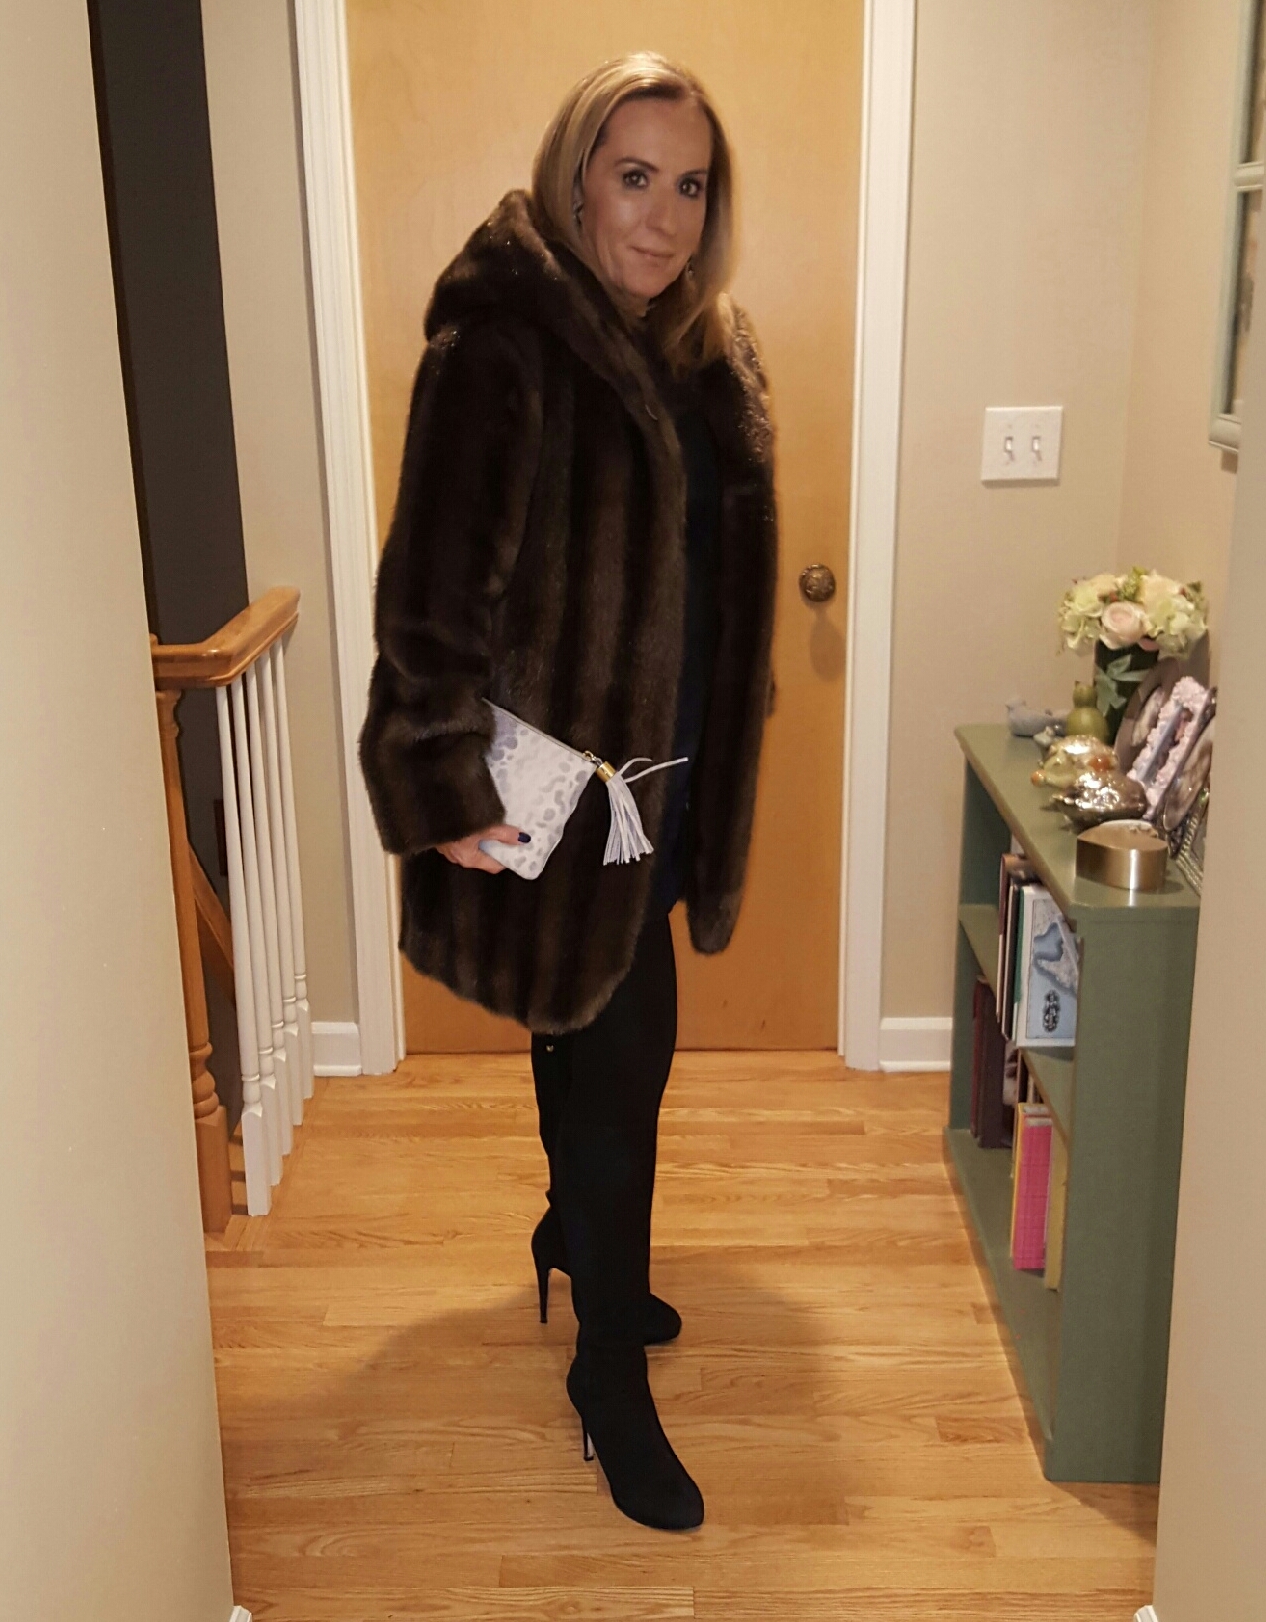 Fuax fur coat over black leather mini dress. - followPhyllis